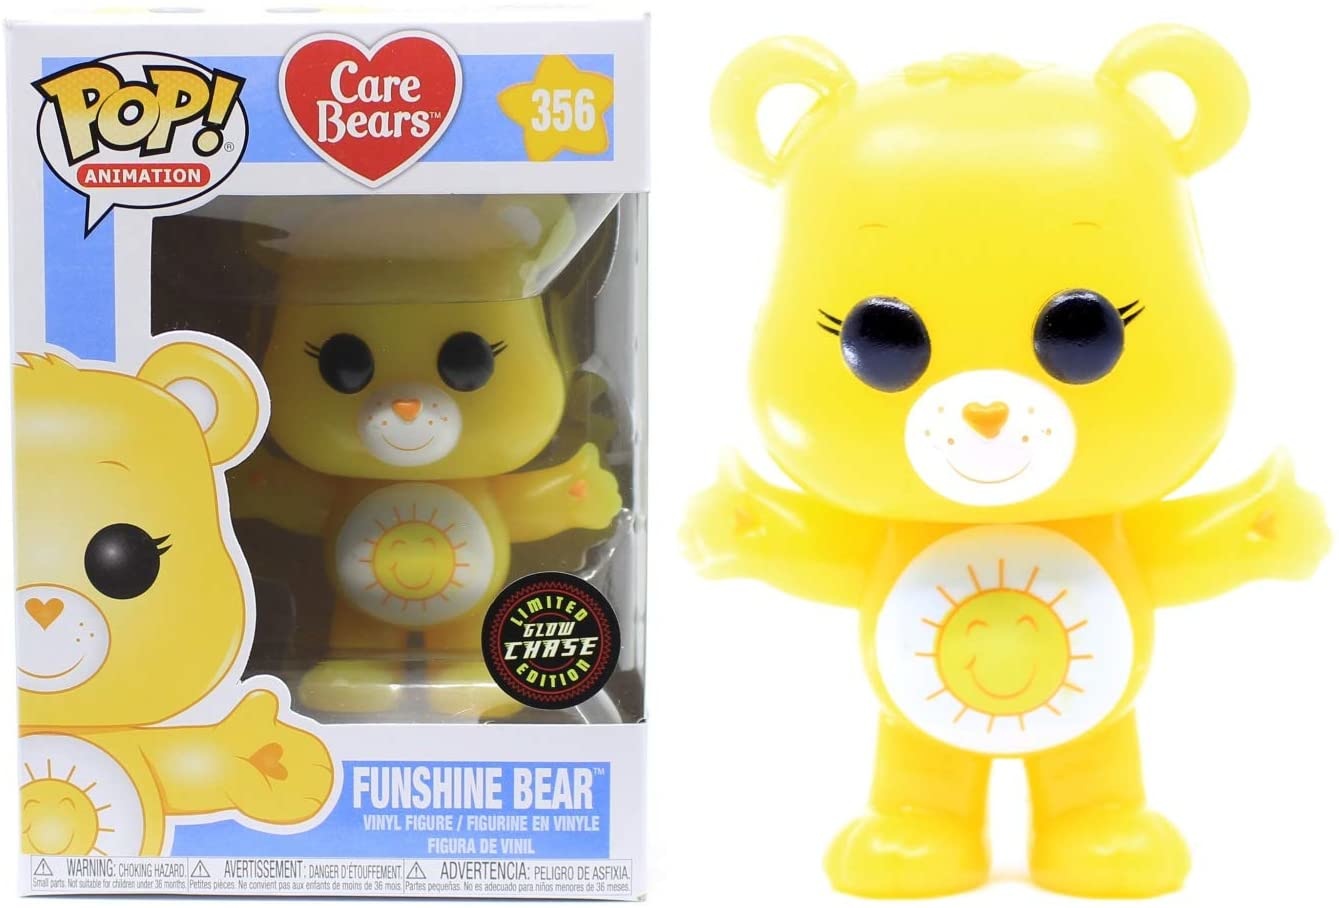 Pop care. Funko Pop Care Bears. Фигурка Funko Pop! Vinyl: Care Bears - good luck Bear 26695. Don't Care Bear Funko Pop. Custom Pop! Toys don't Care Bears.